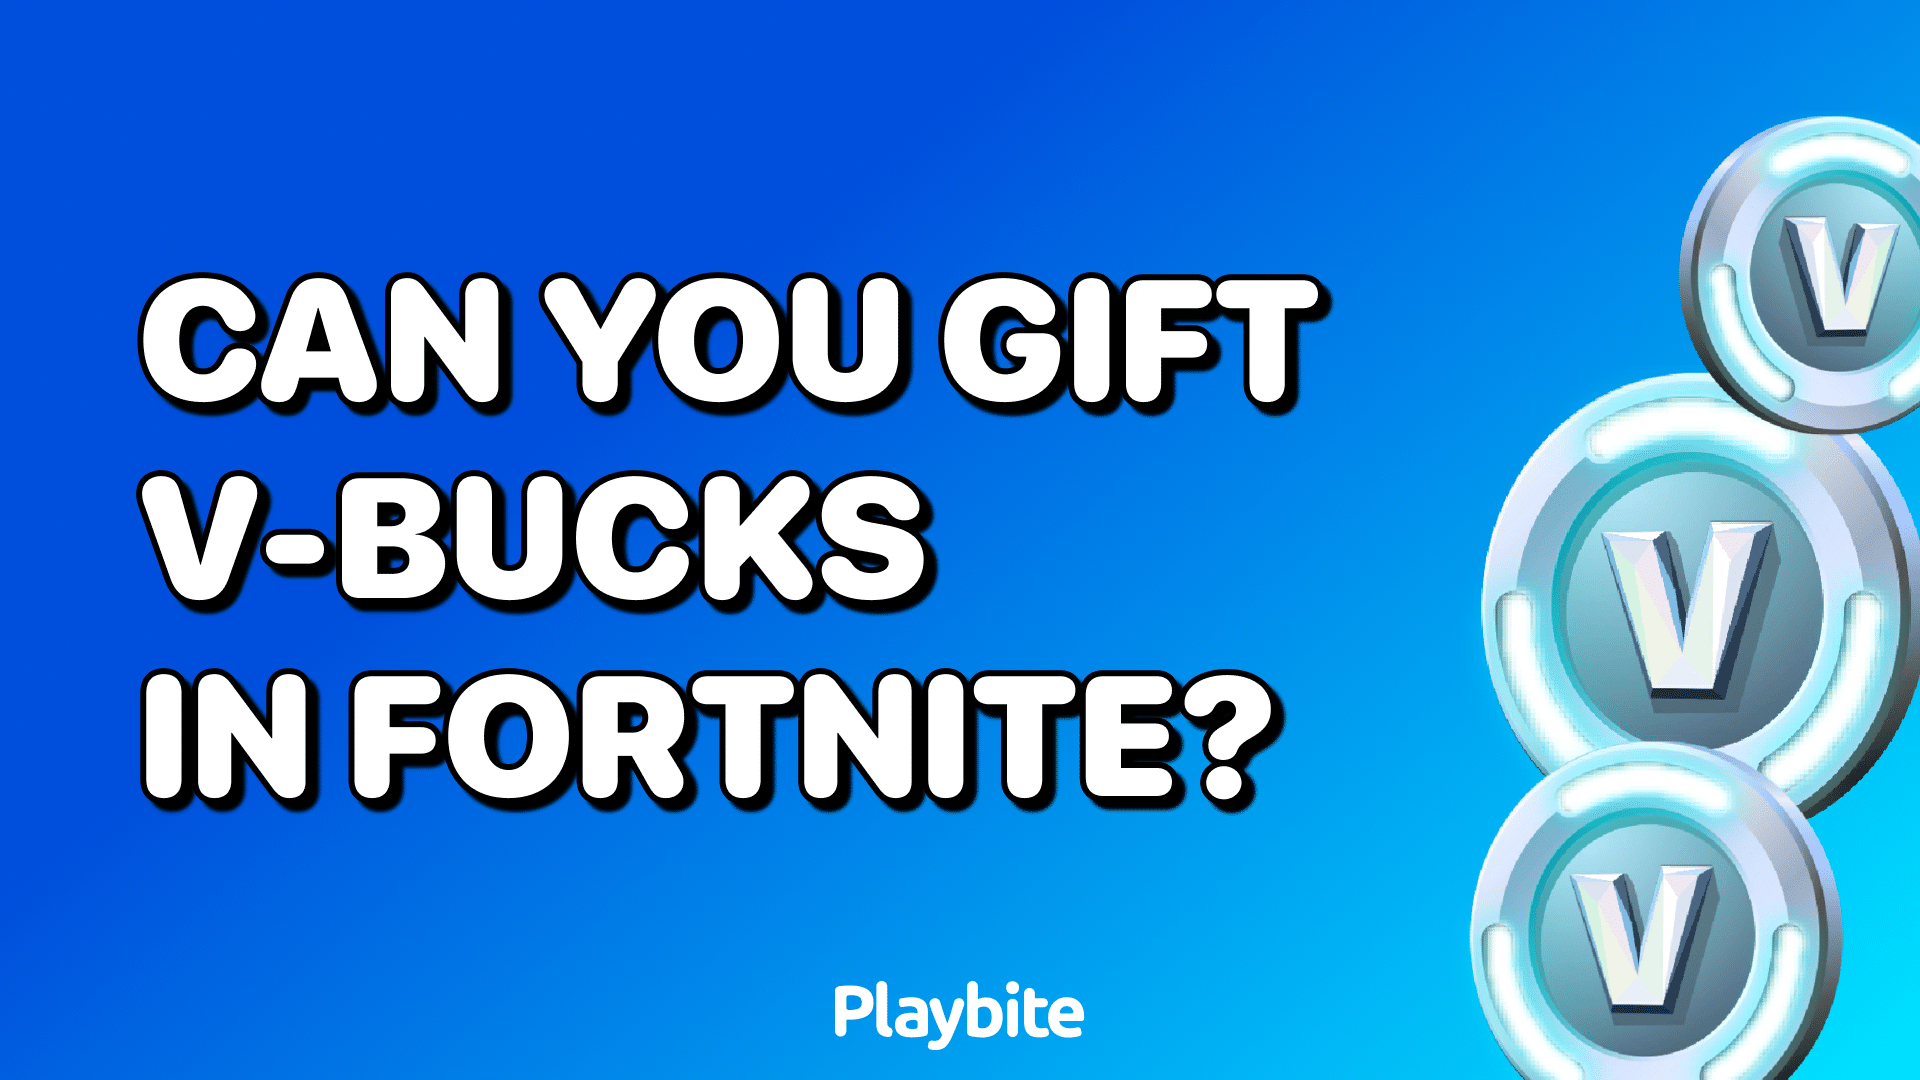 Can You Gift V-Bucks In Fortnite?